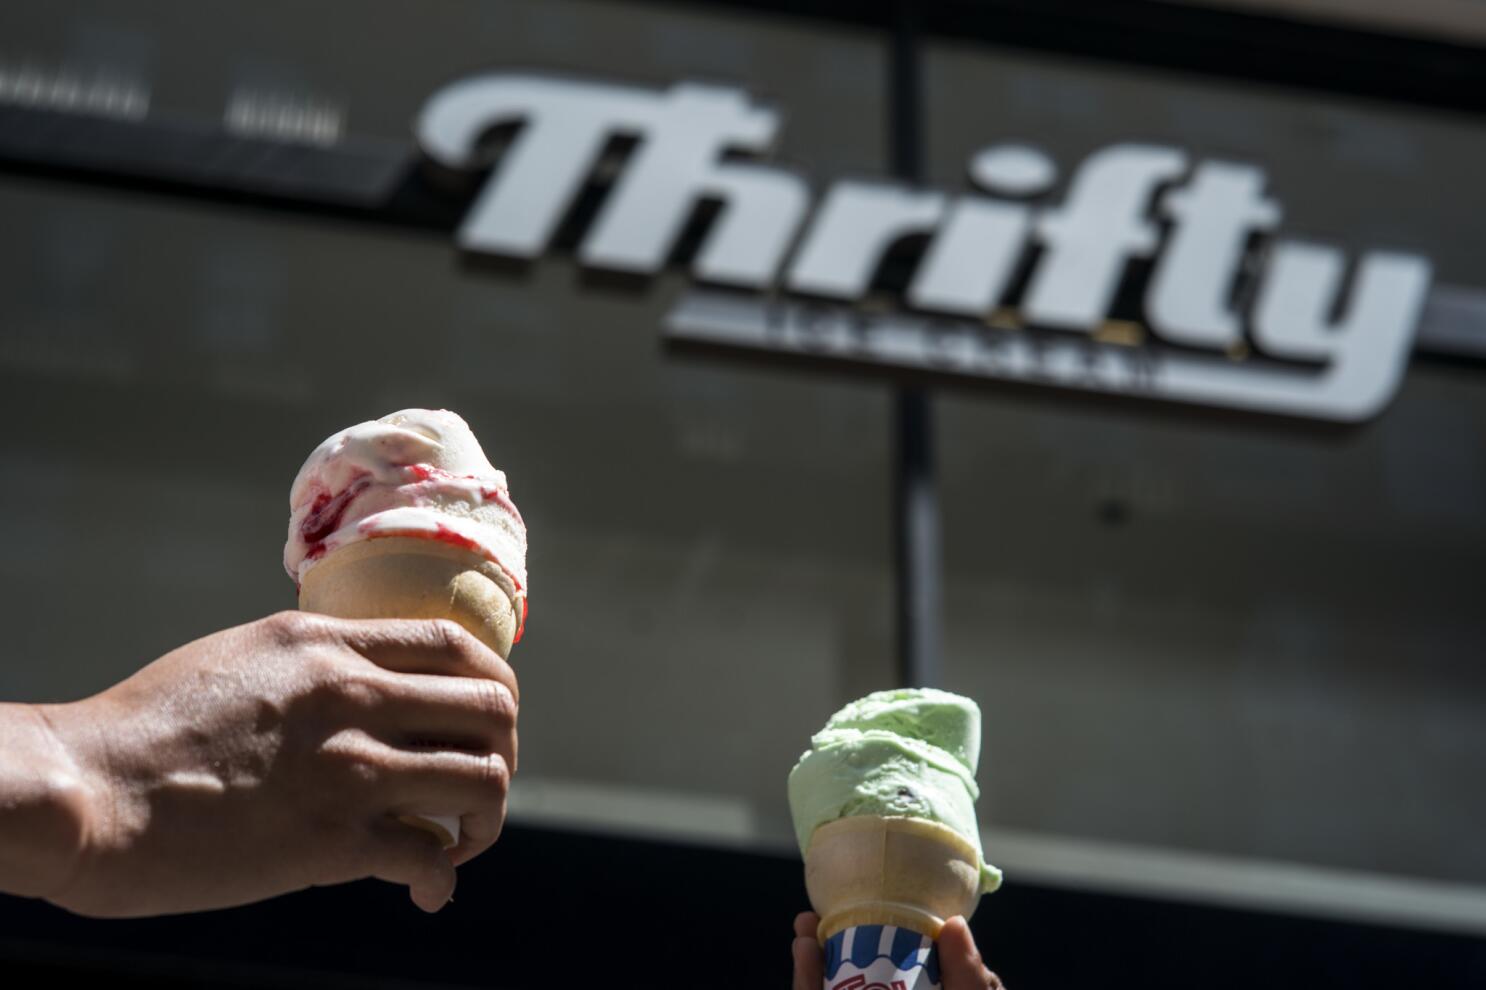 seatbeltblog: Thrifty Ice Cream